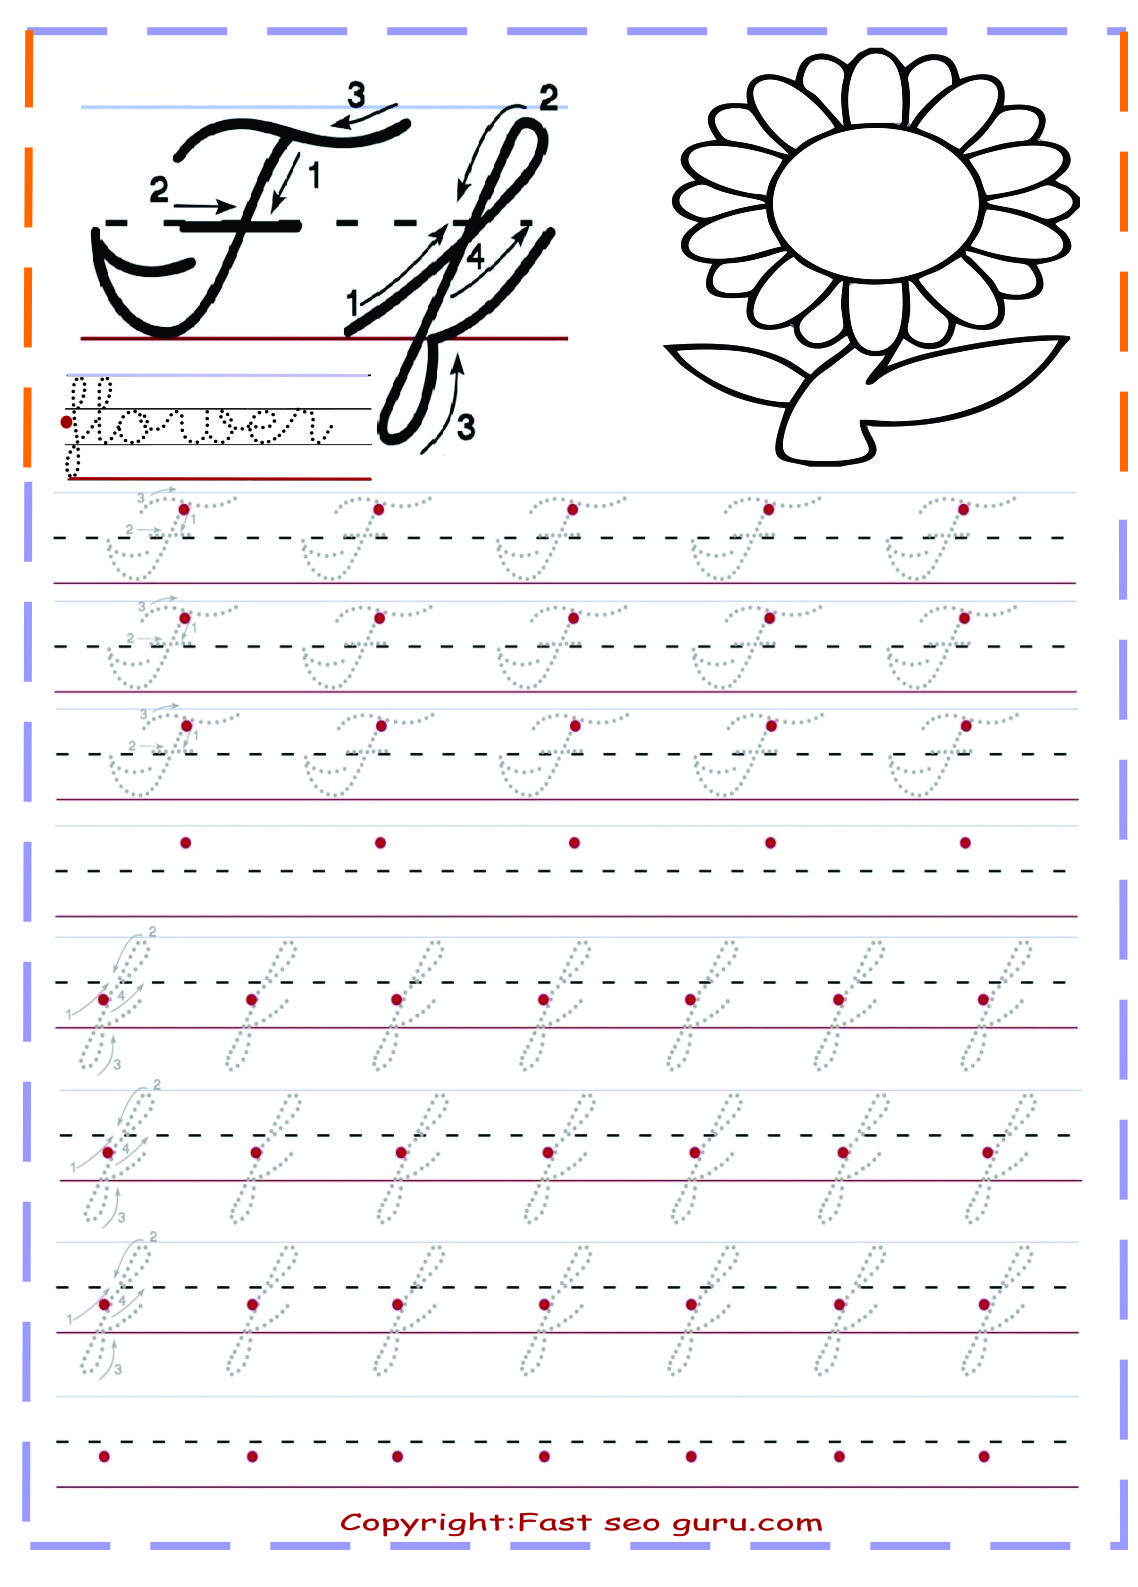 Worksheet ~ Cursive Handwriting Tracing Worksheets For